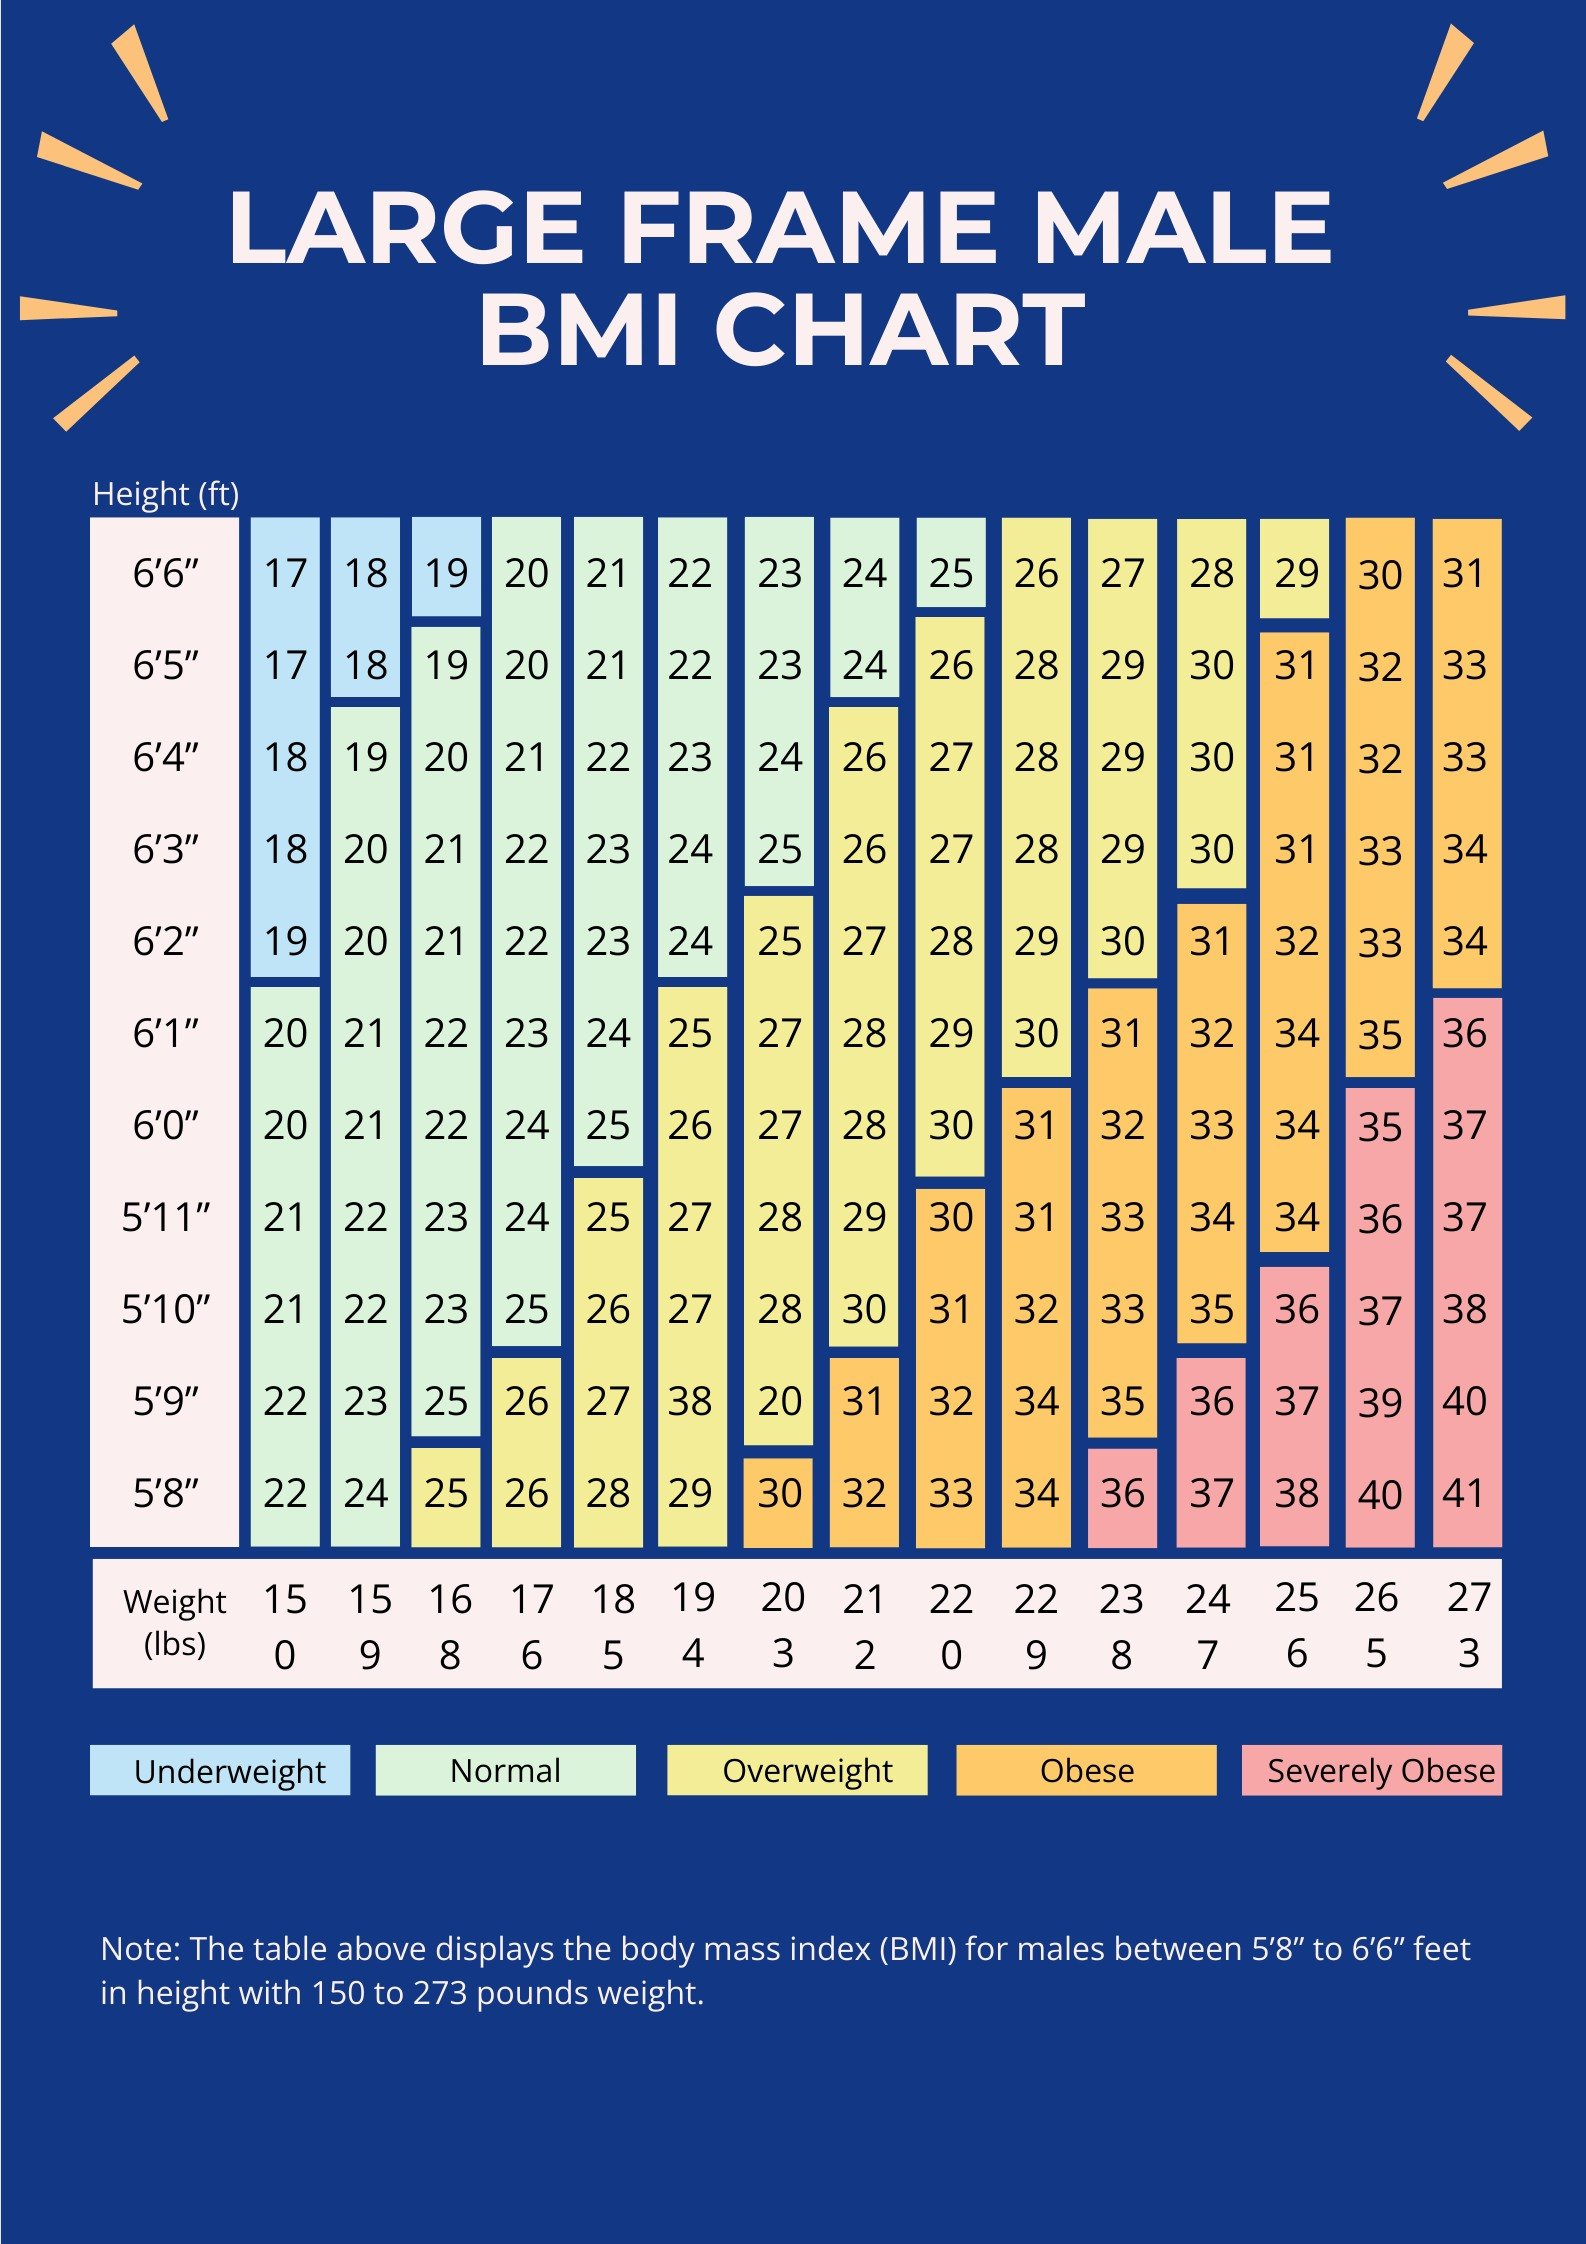 Free Obesity Male BMI Chart Illustrator, Word, PSD, PDF